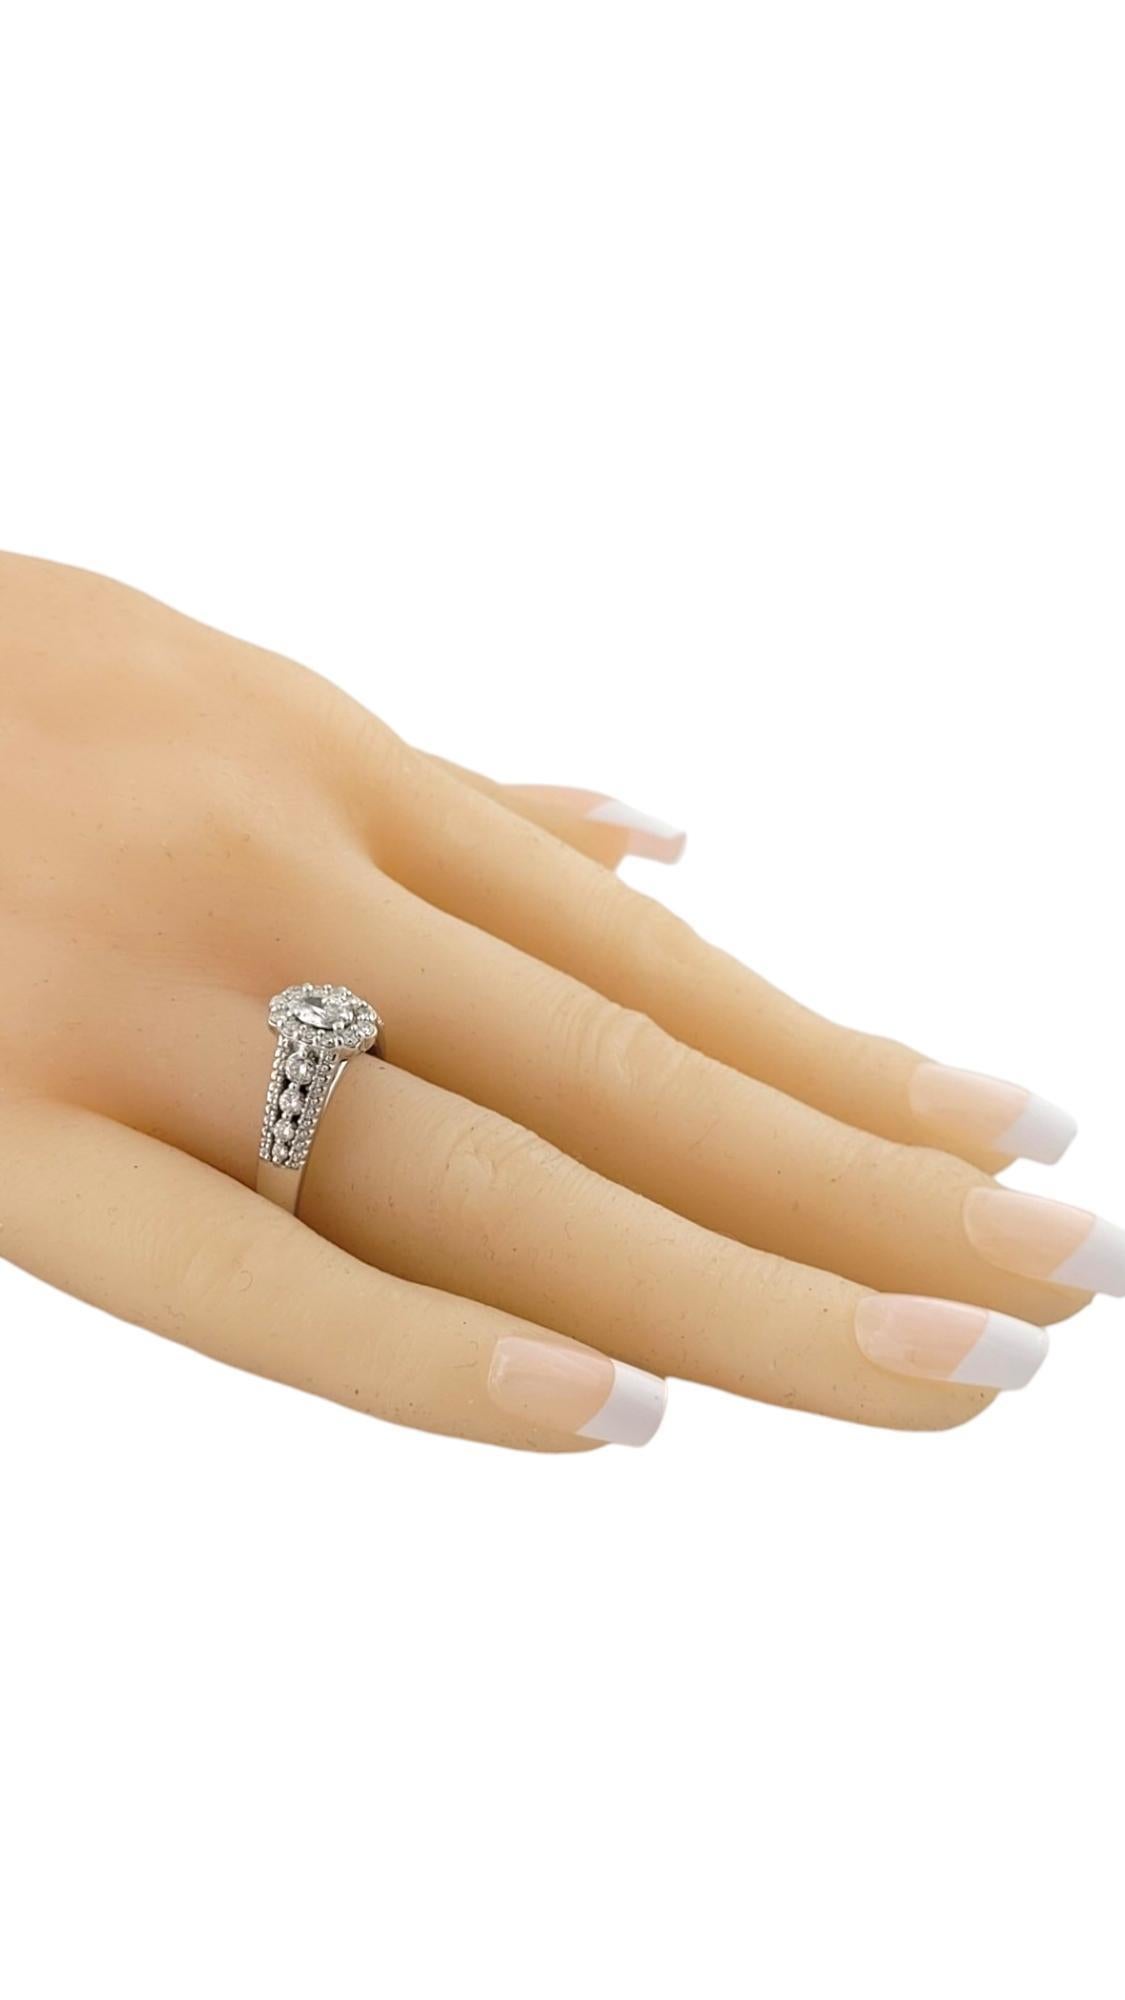 14 Karat White Gold Diamond Engagement Ring Size 8.75 #16989 For Sale 1